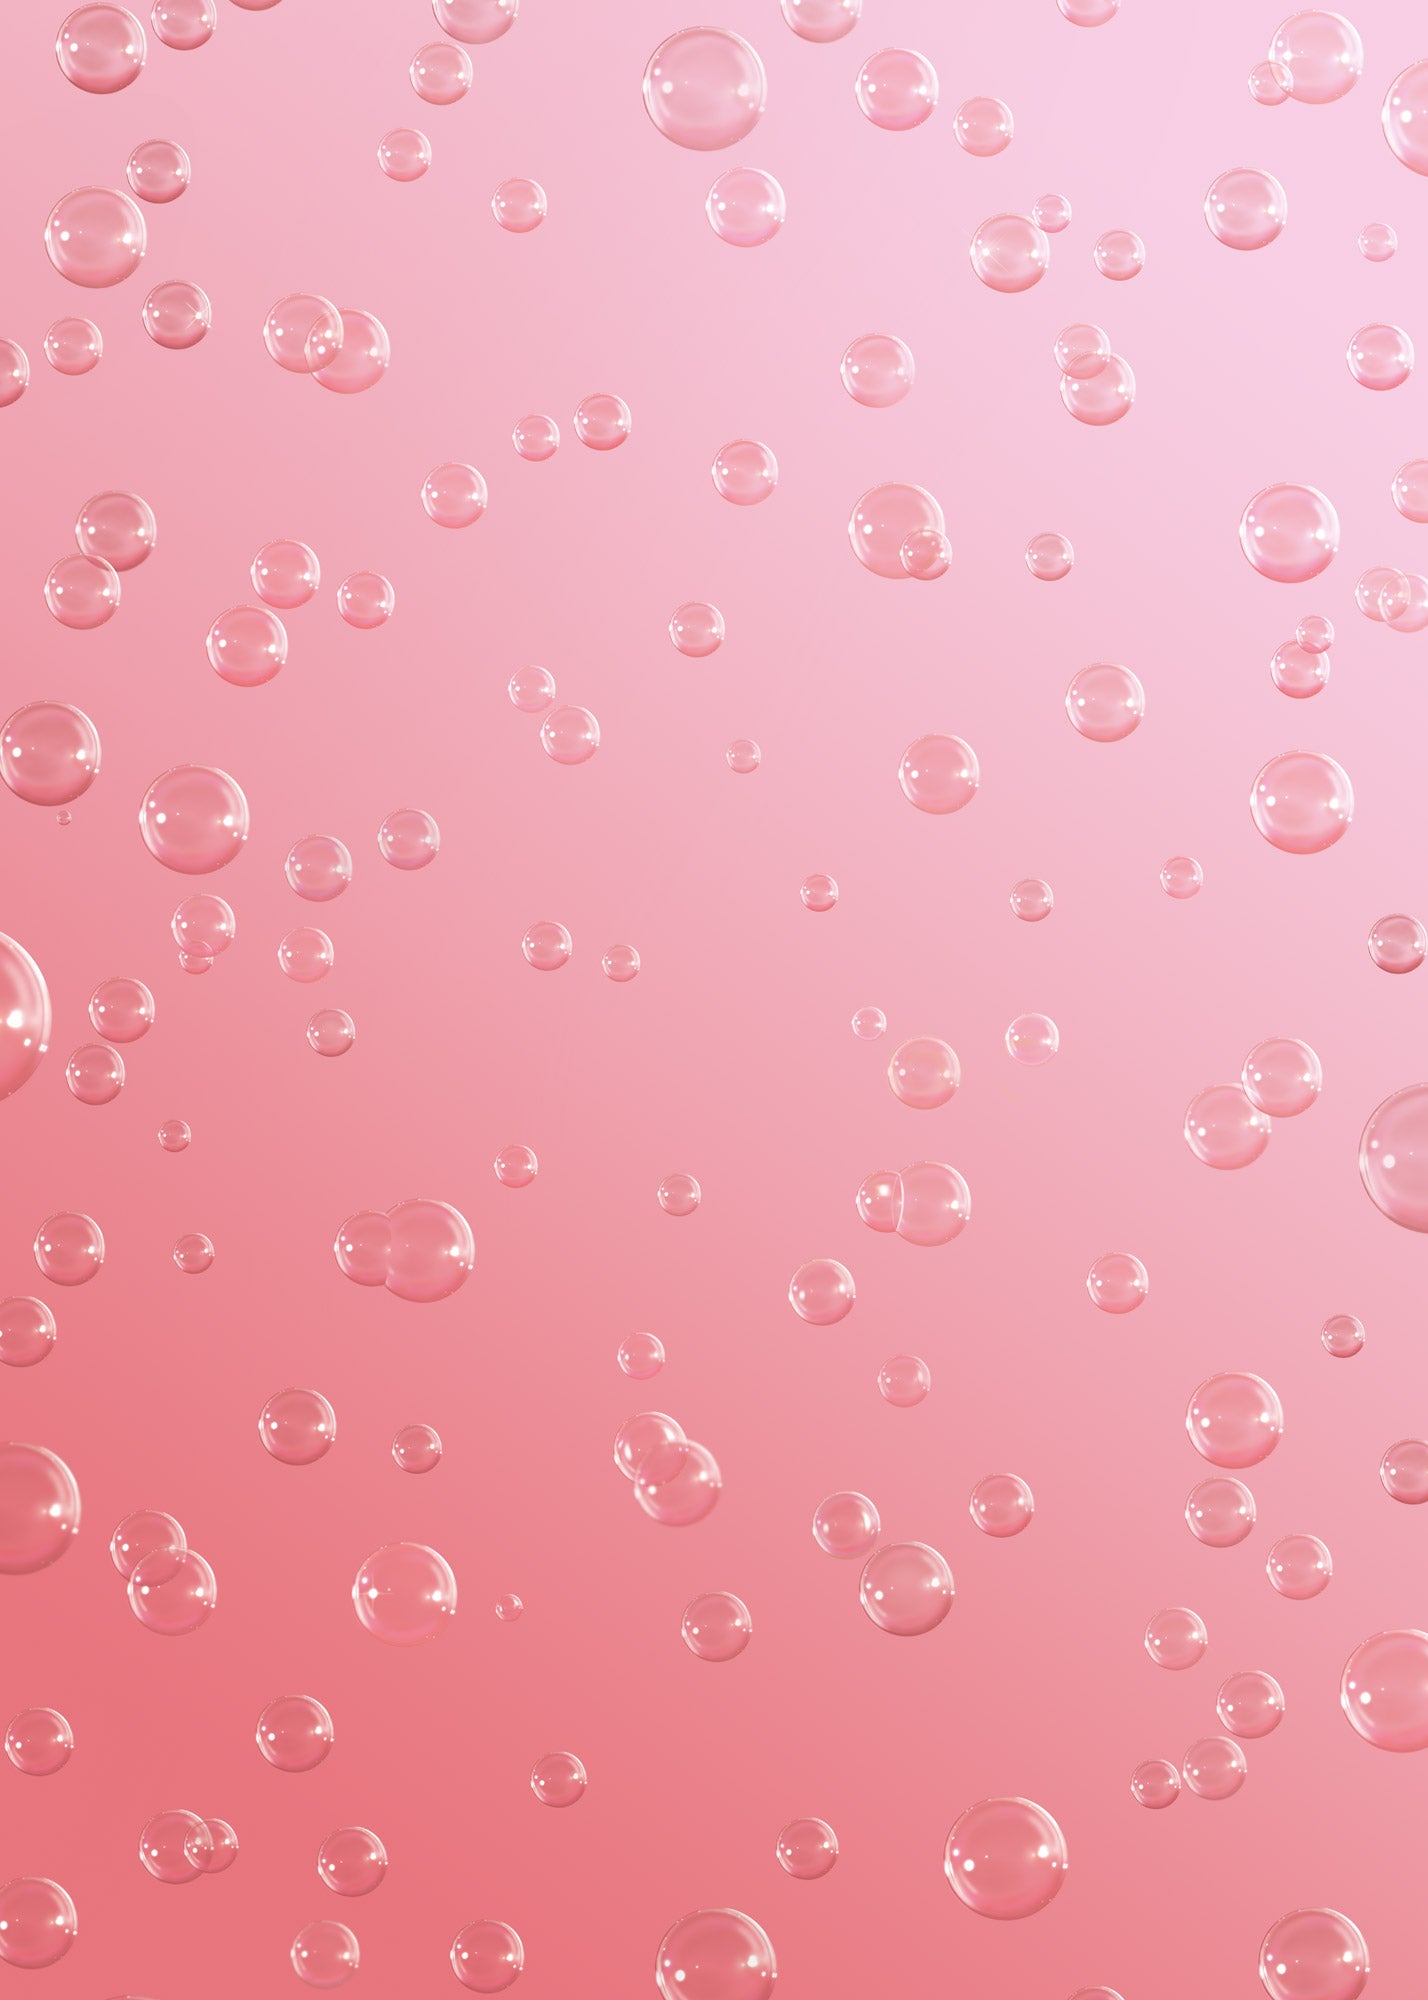 Rosé Bubbles Vinyl Photography Backdrop by Club Backdrops